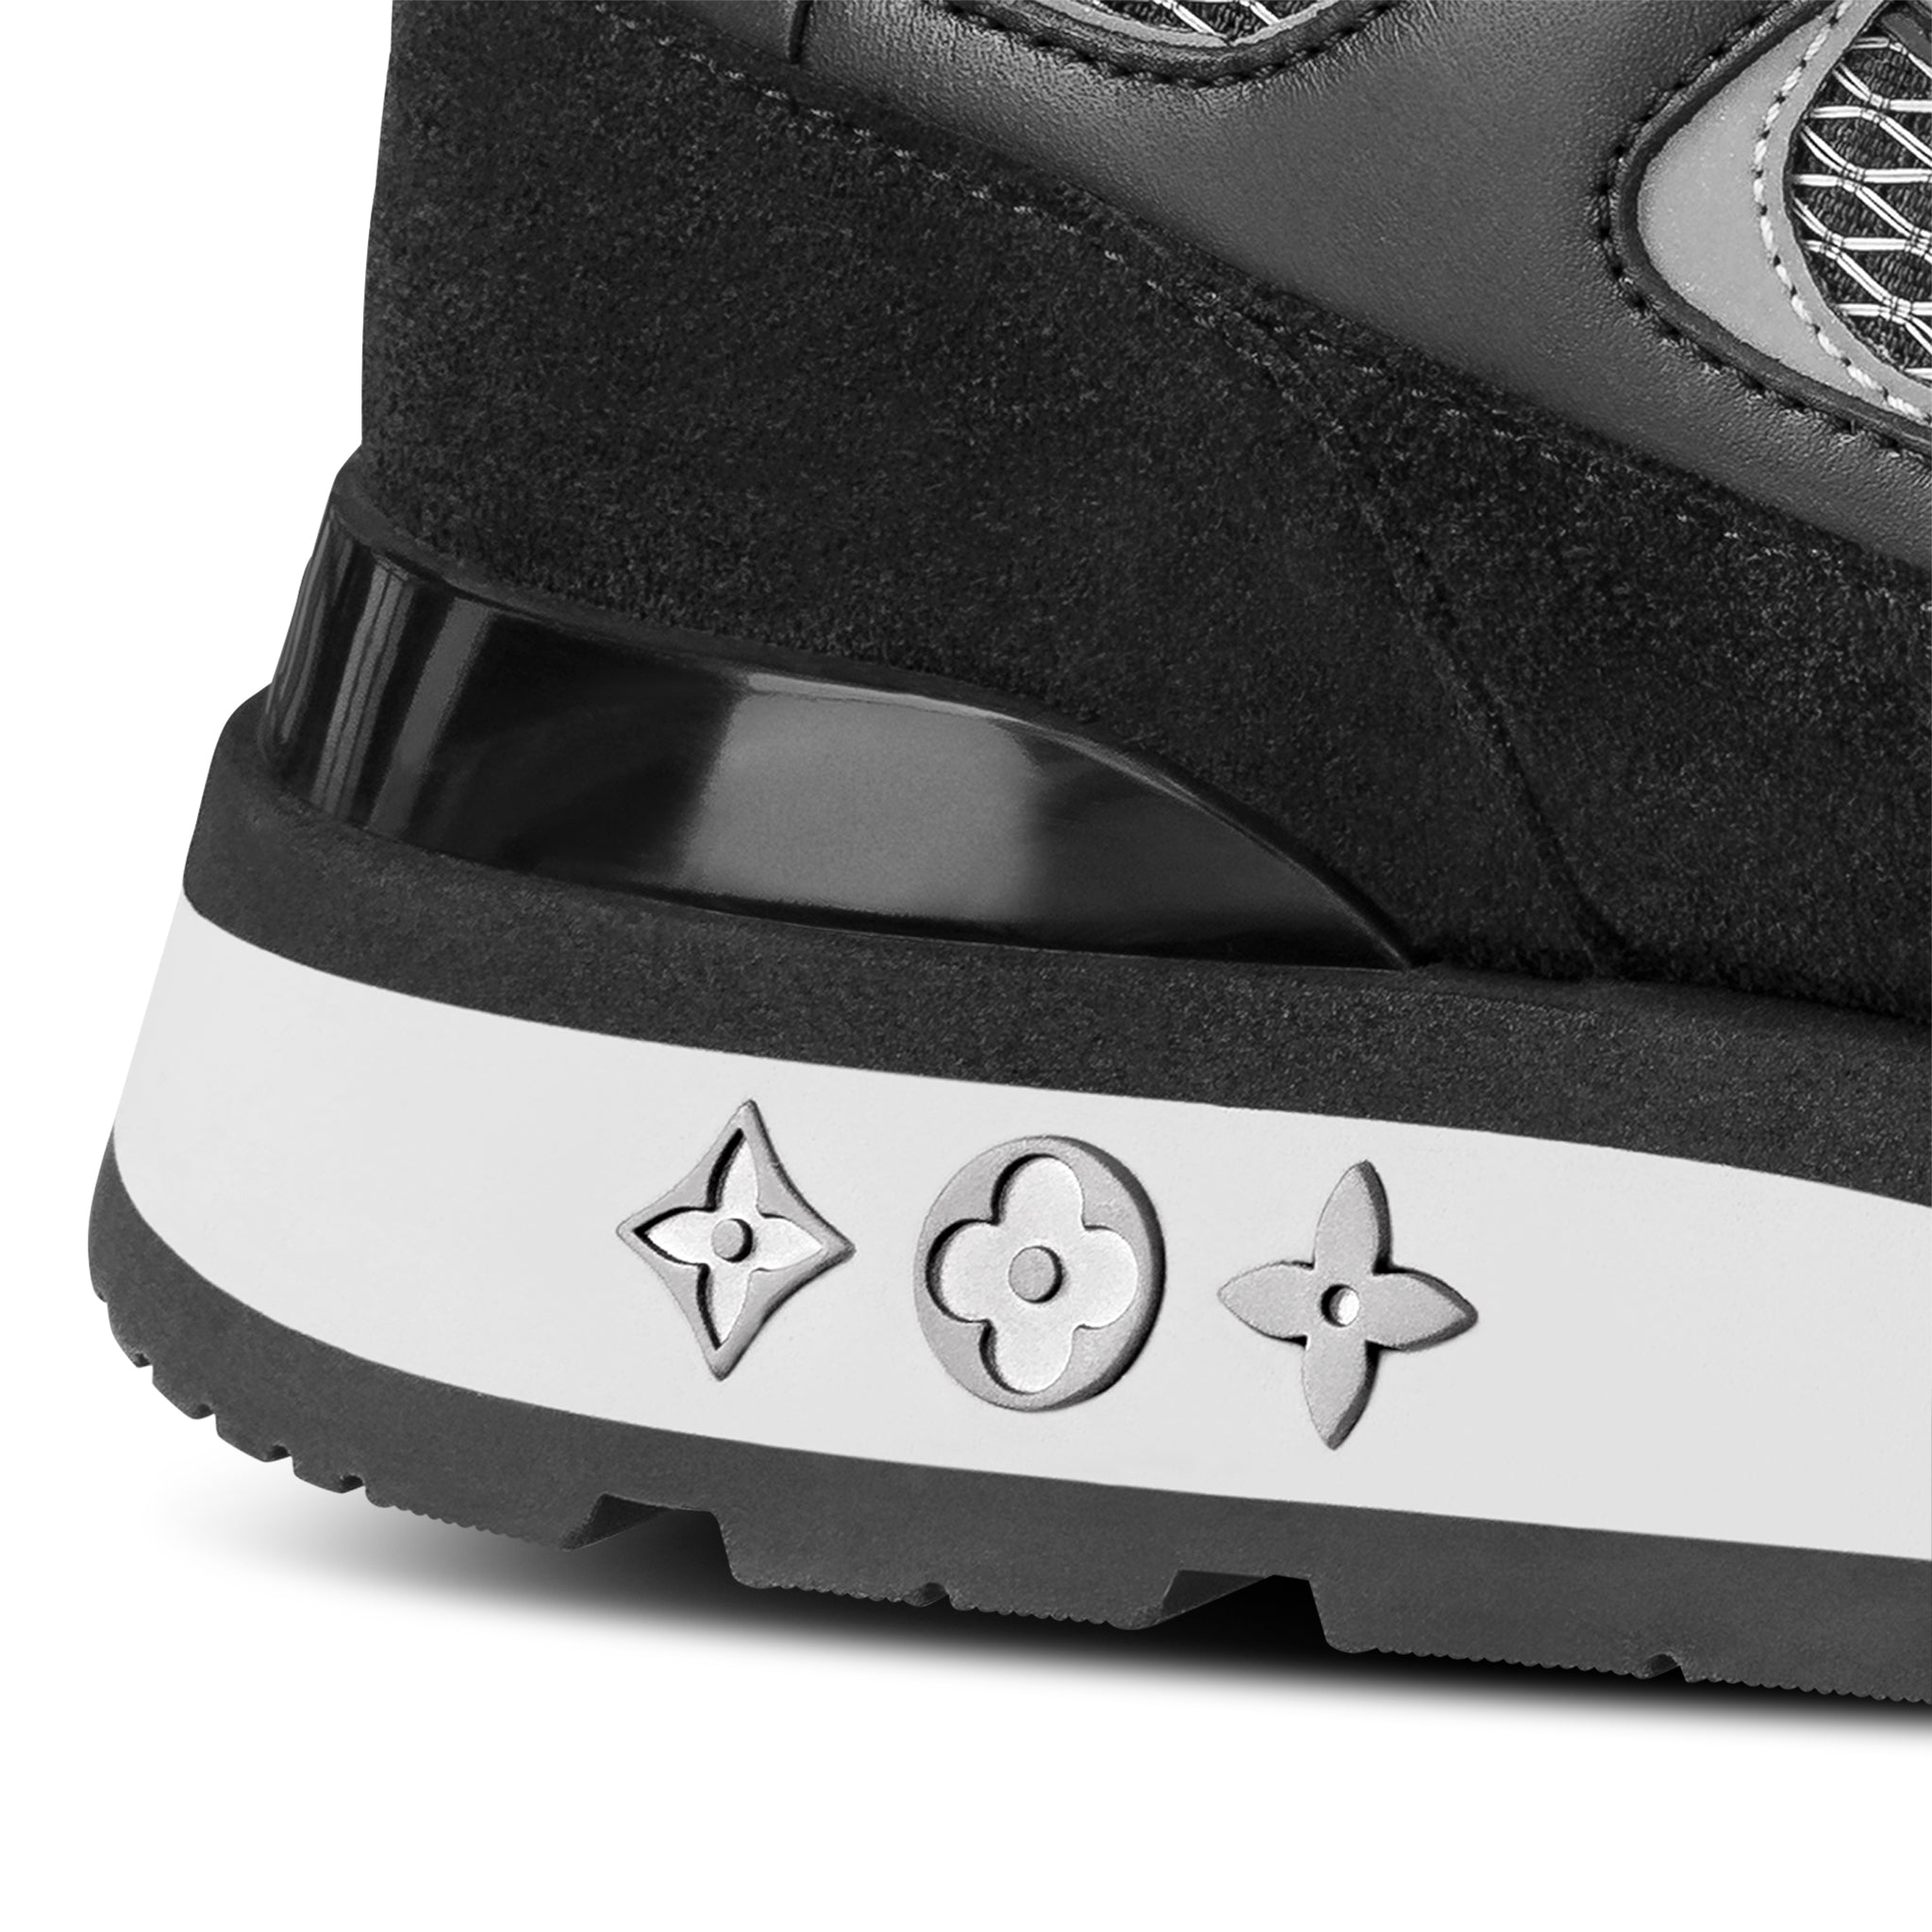 Heel view of Louis Vuitton LV Run Away Black Sneaker NVPROD3150014V